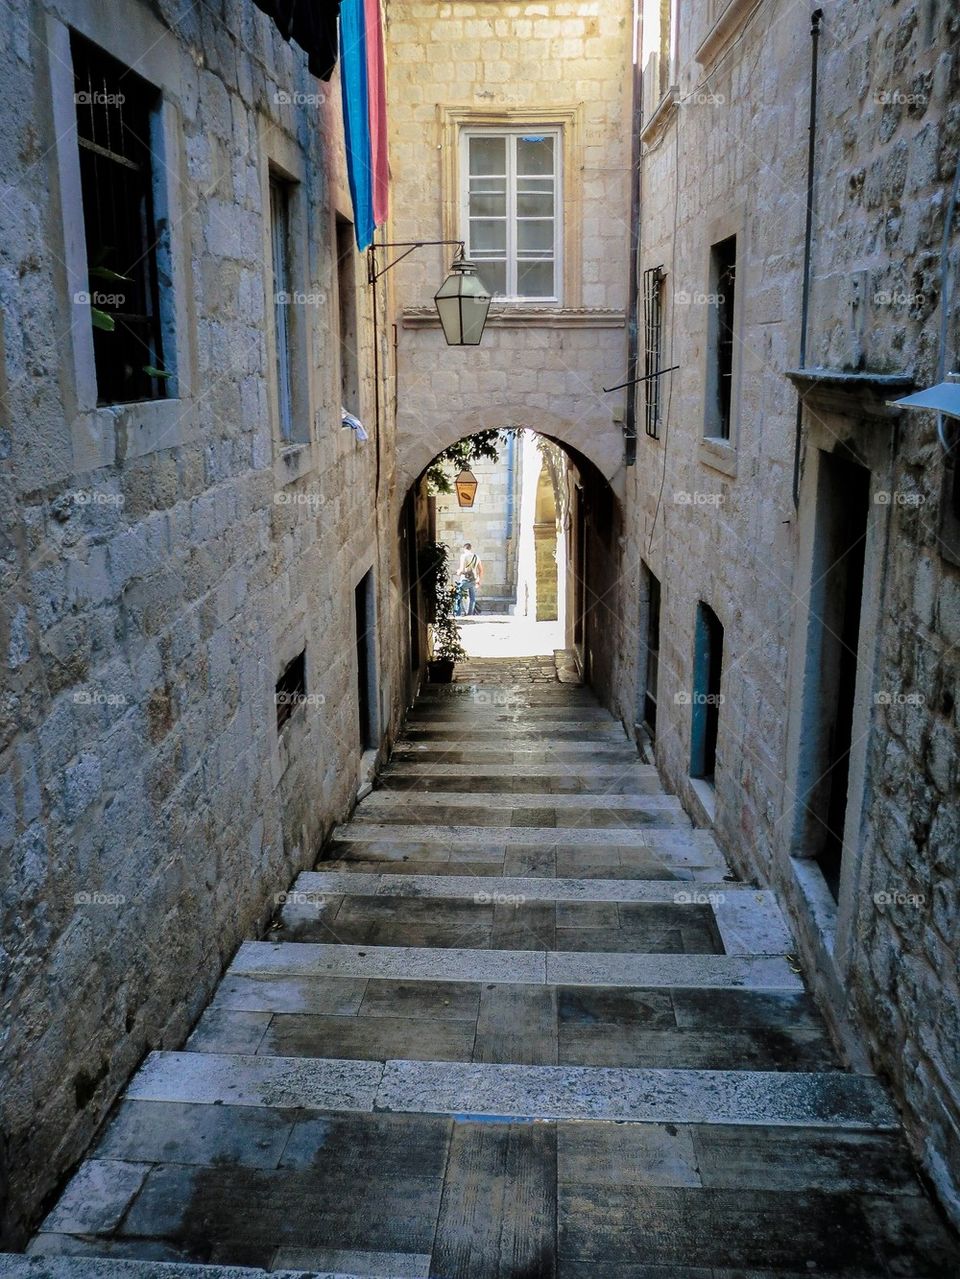 Narrow street. Narrow street in Croatia 